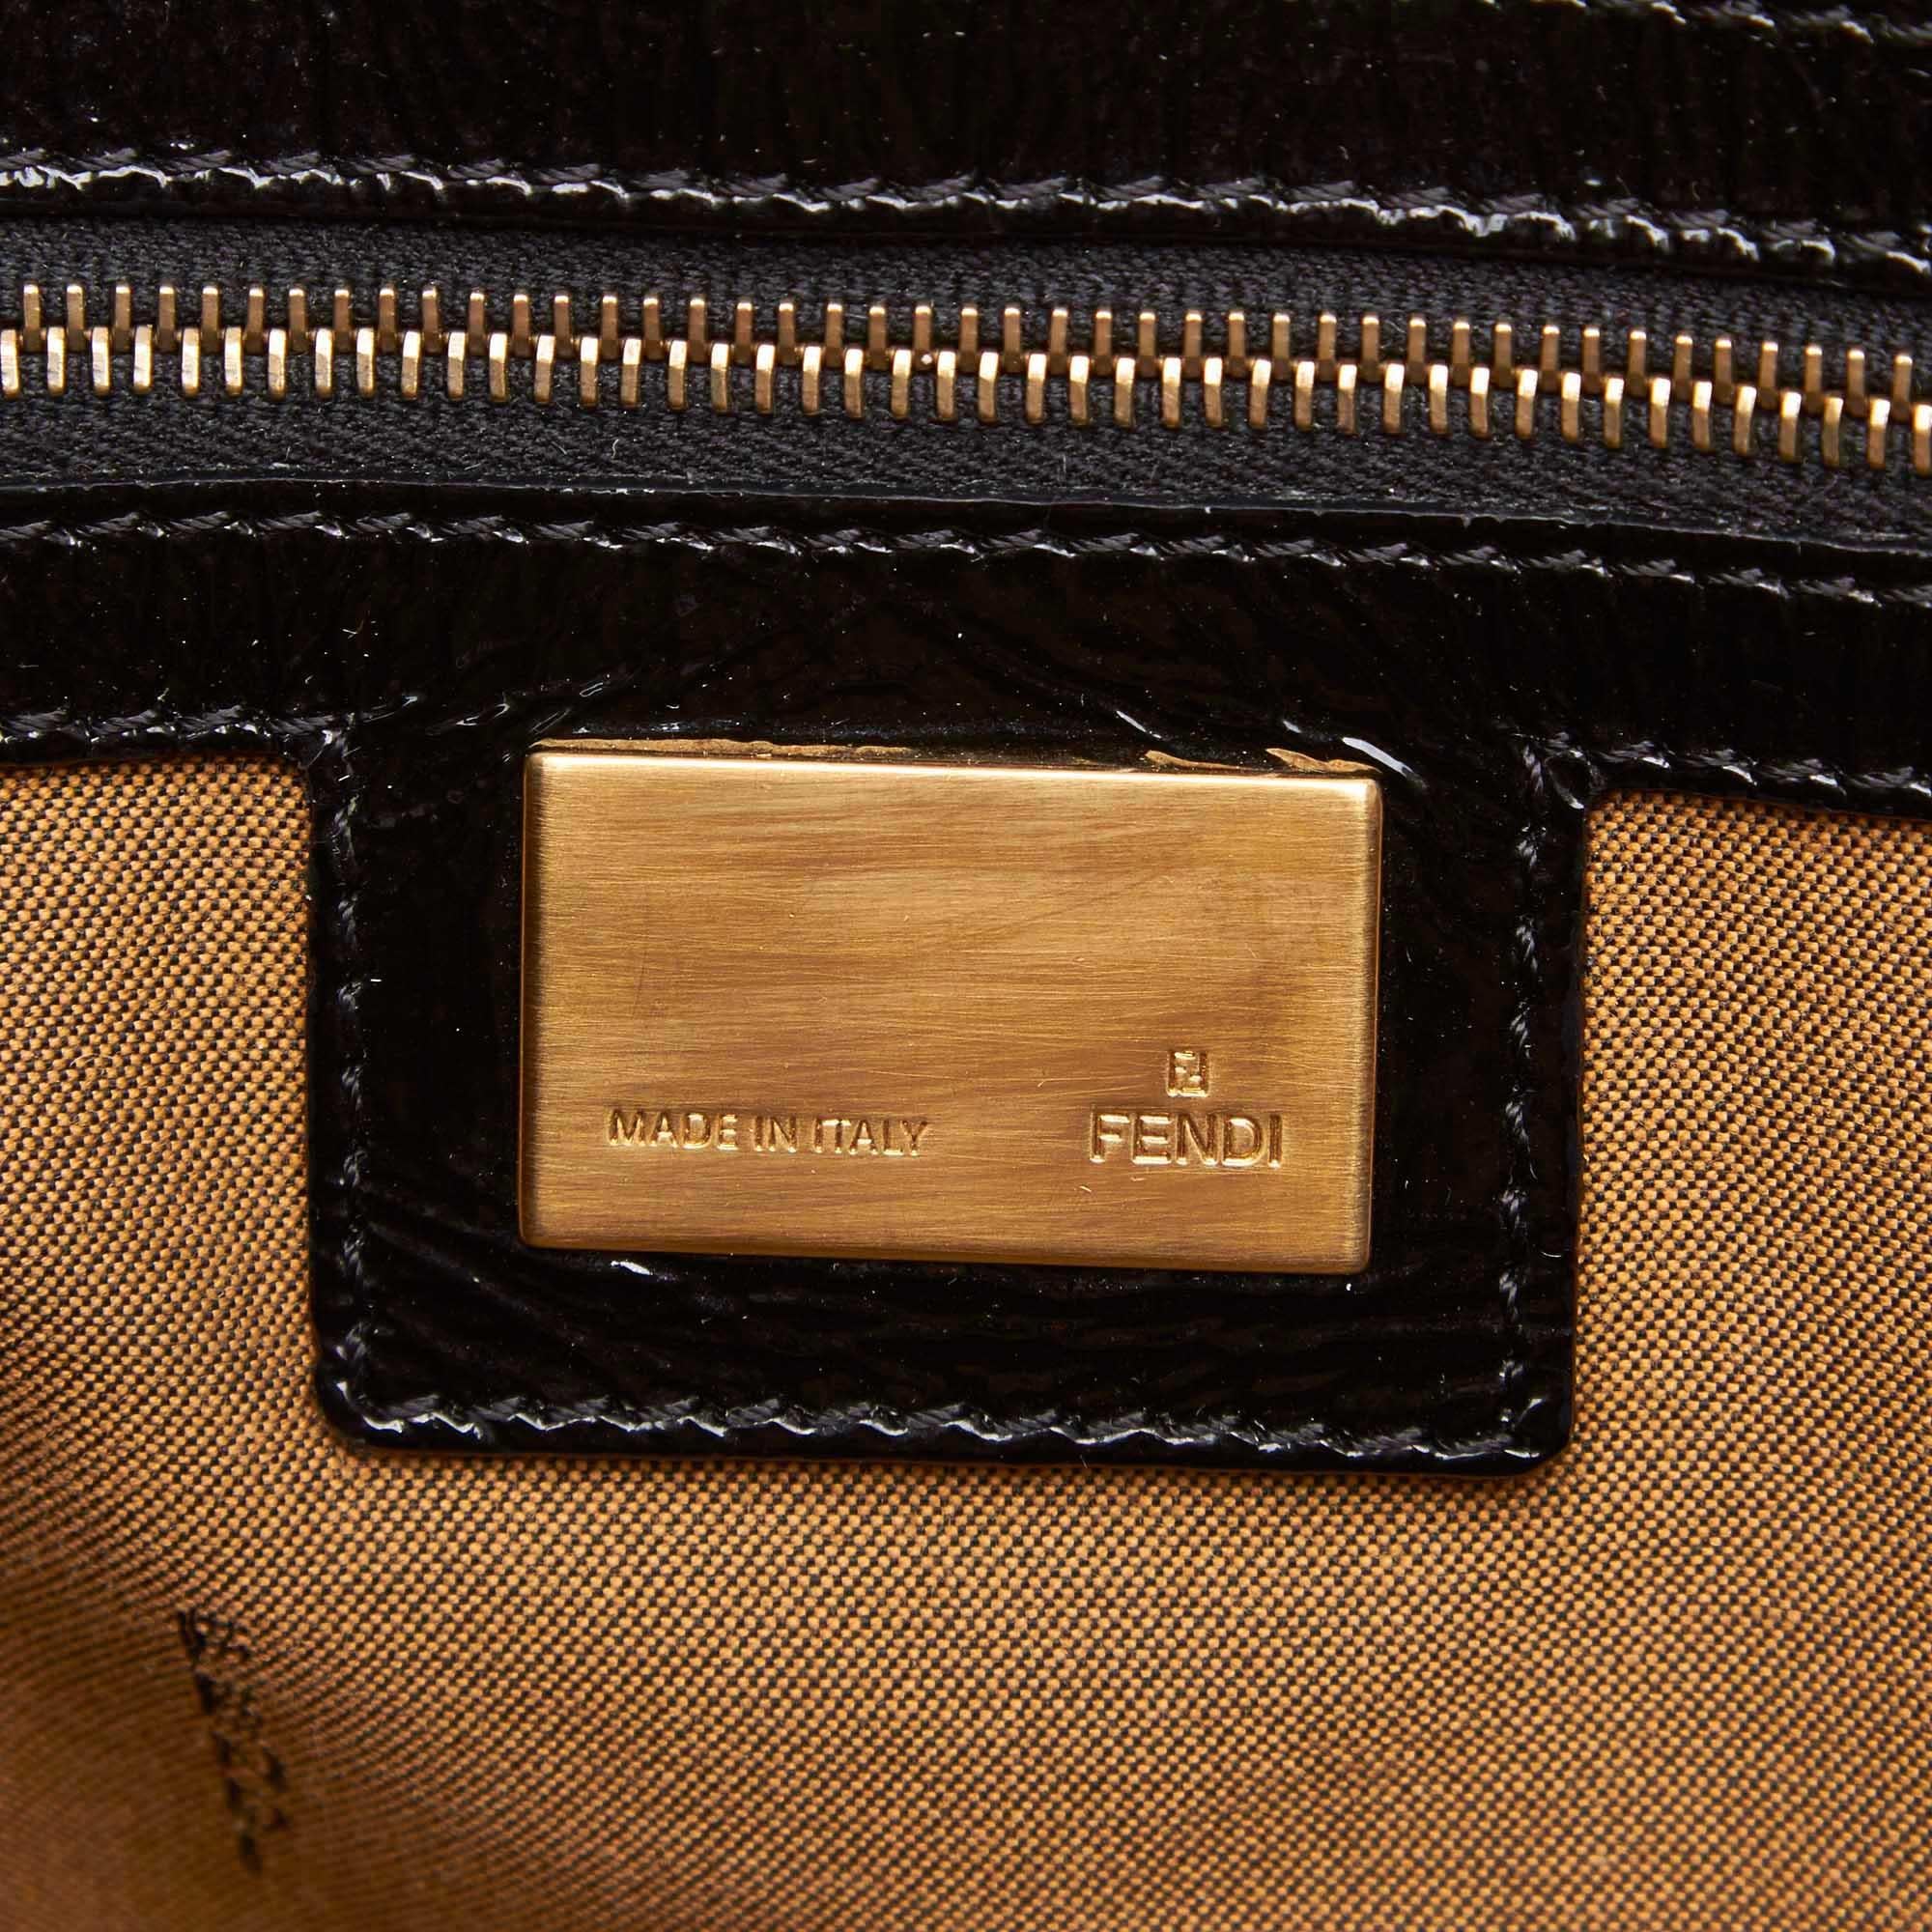 Fendi Black Patent Leather Bag Du Jour Tote 2